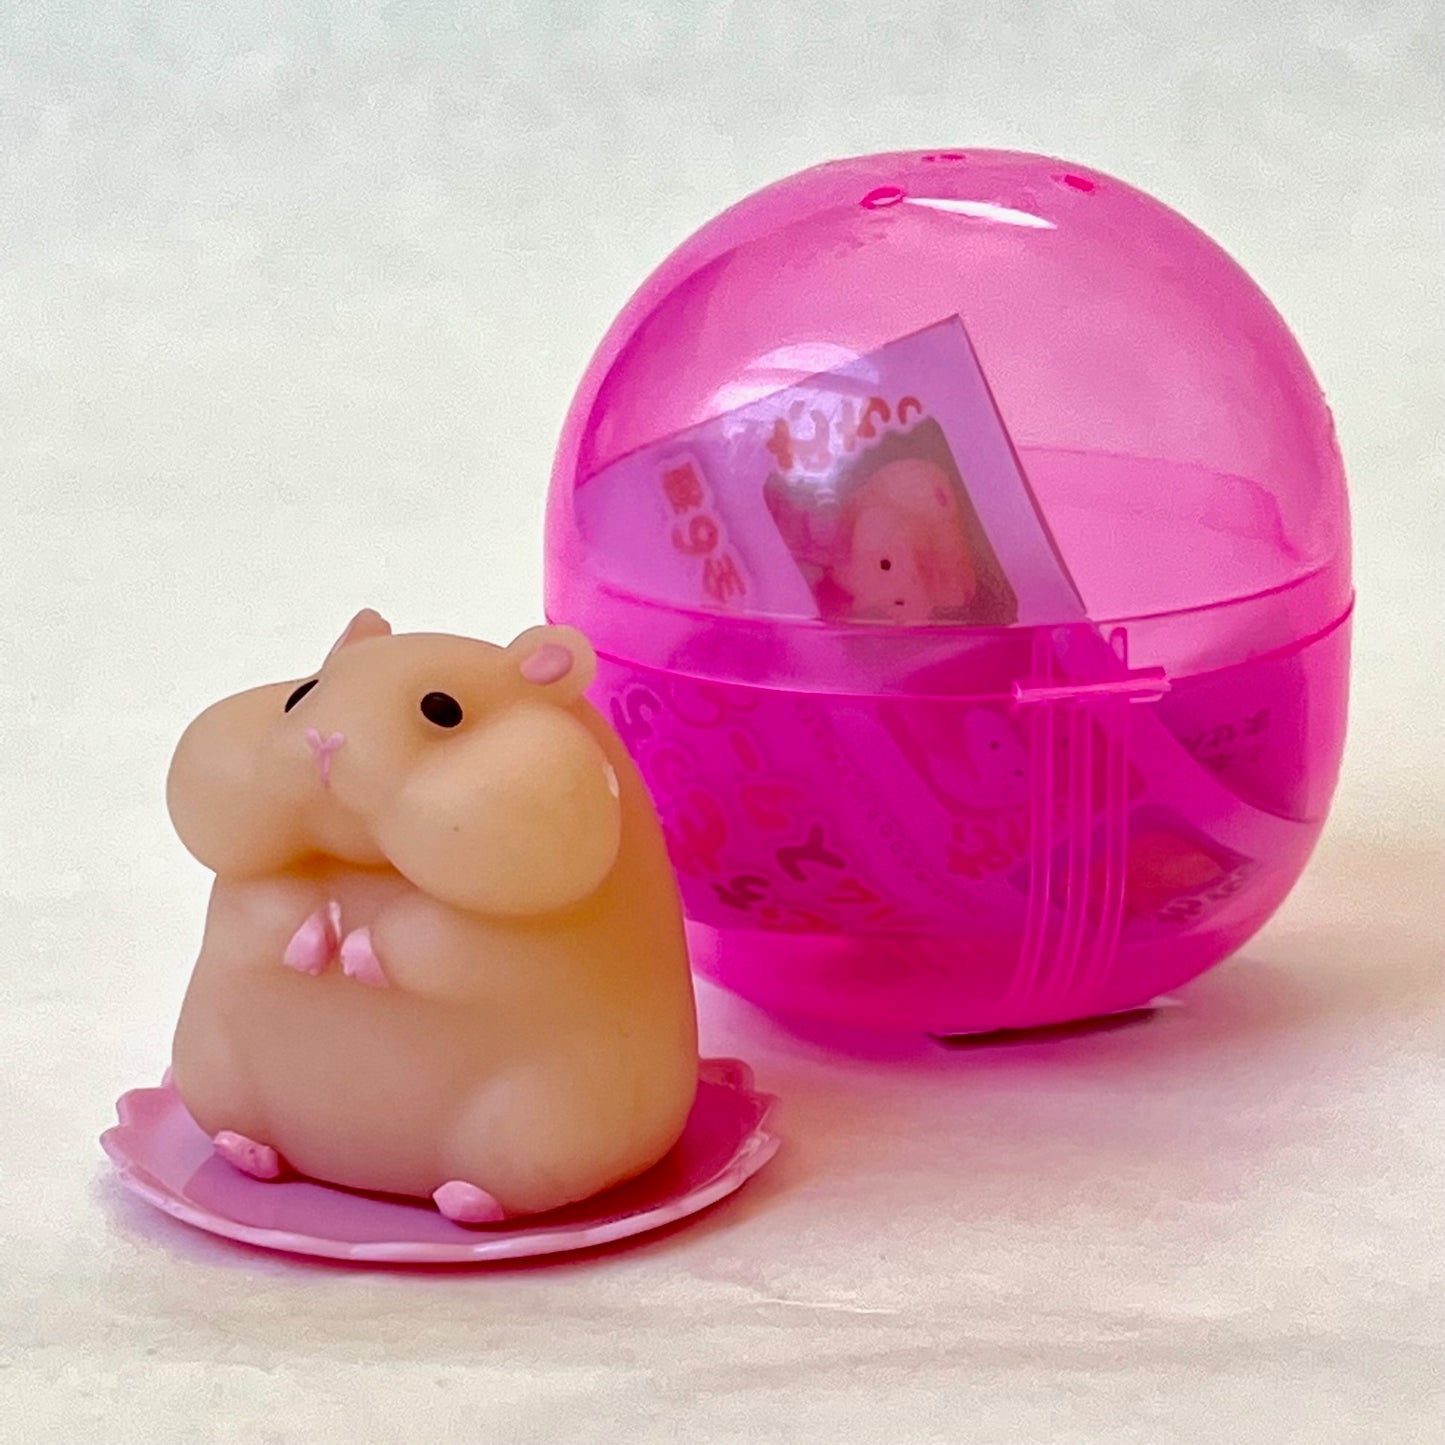 X 70259 Squishy Hamsters Figurine Capsule-DISCONTINUED